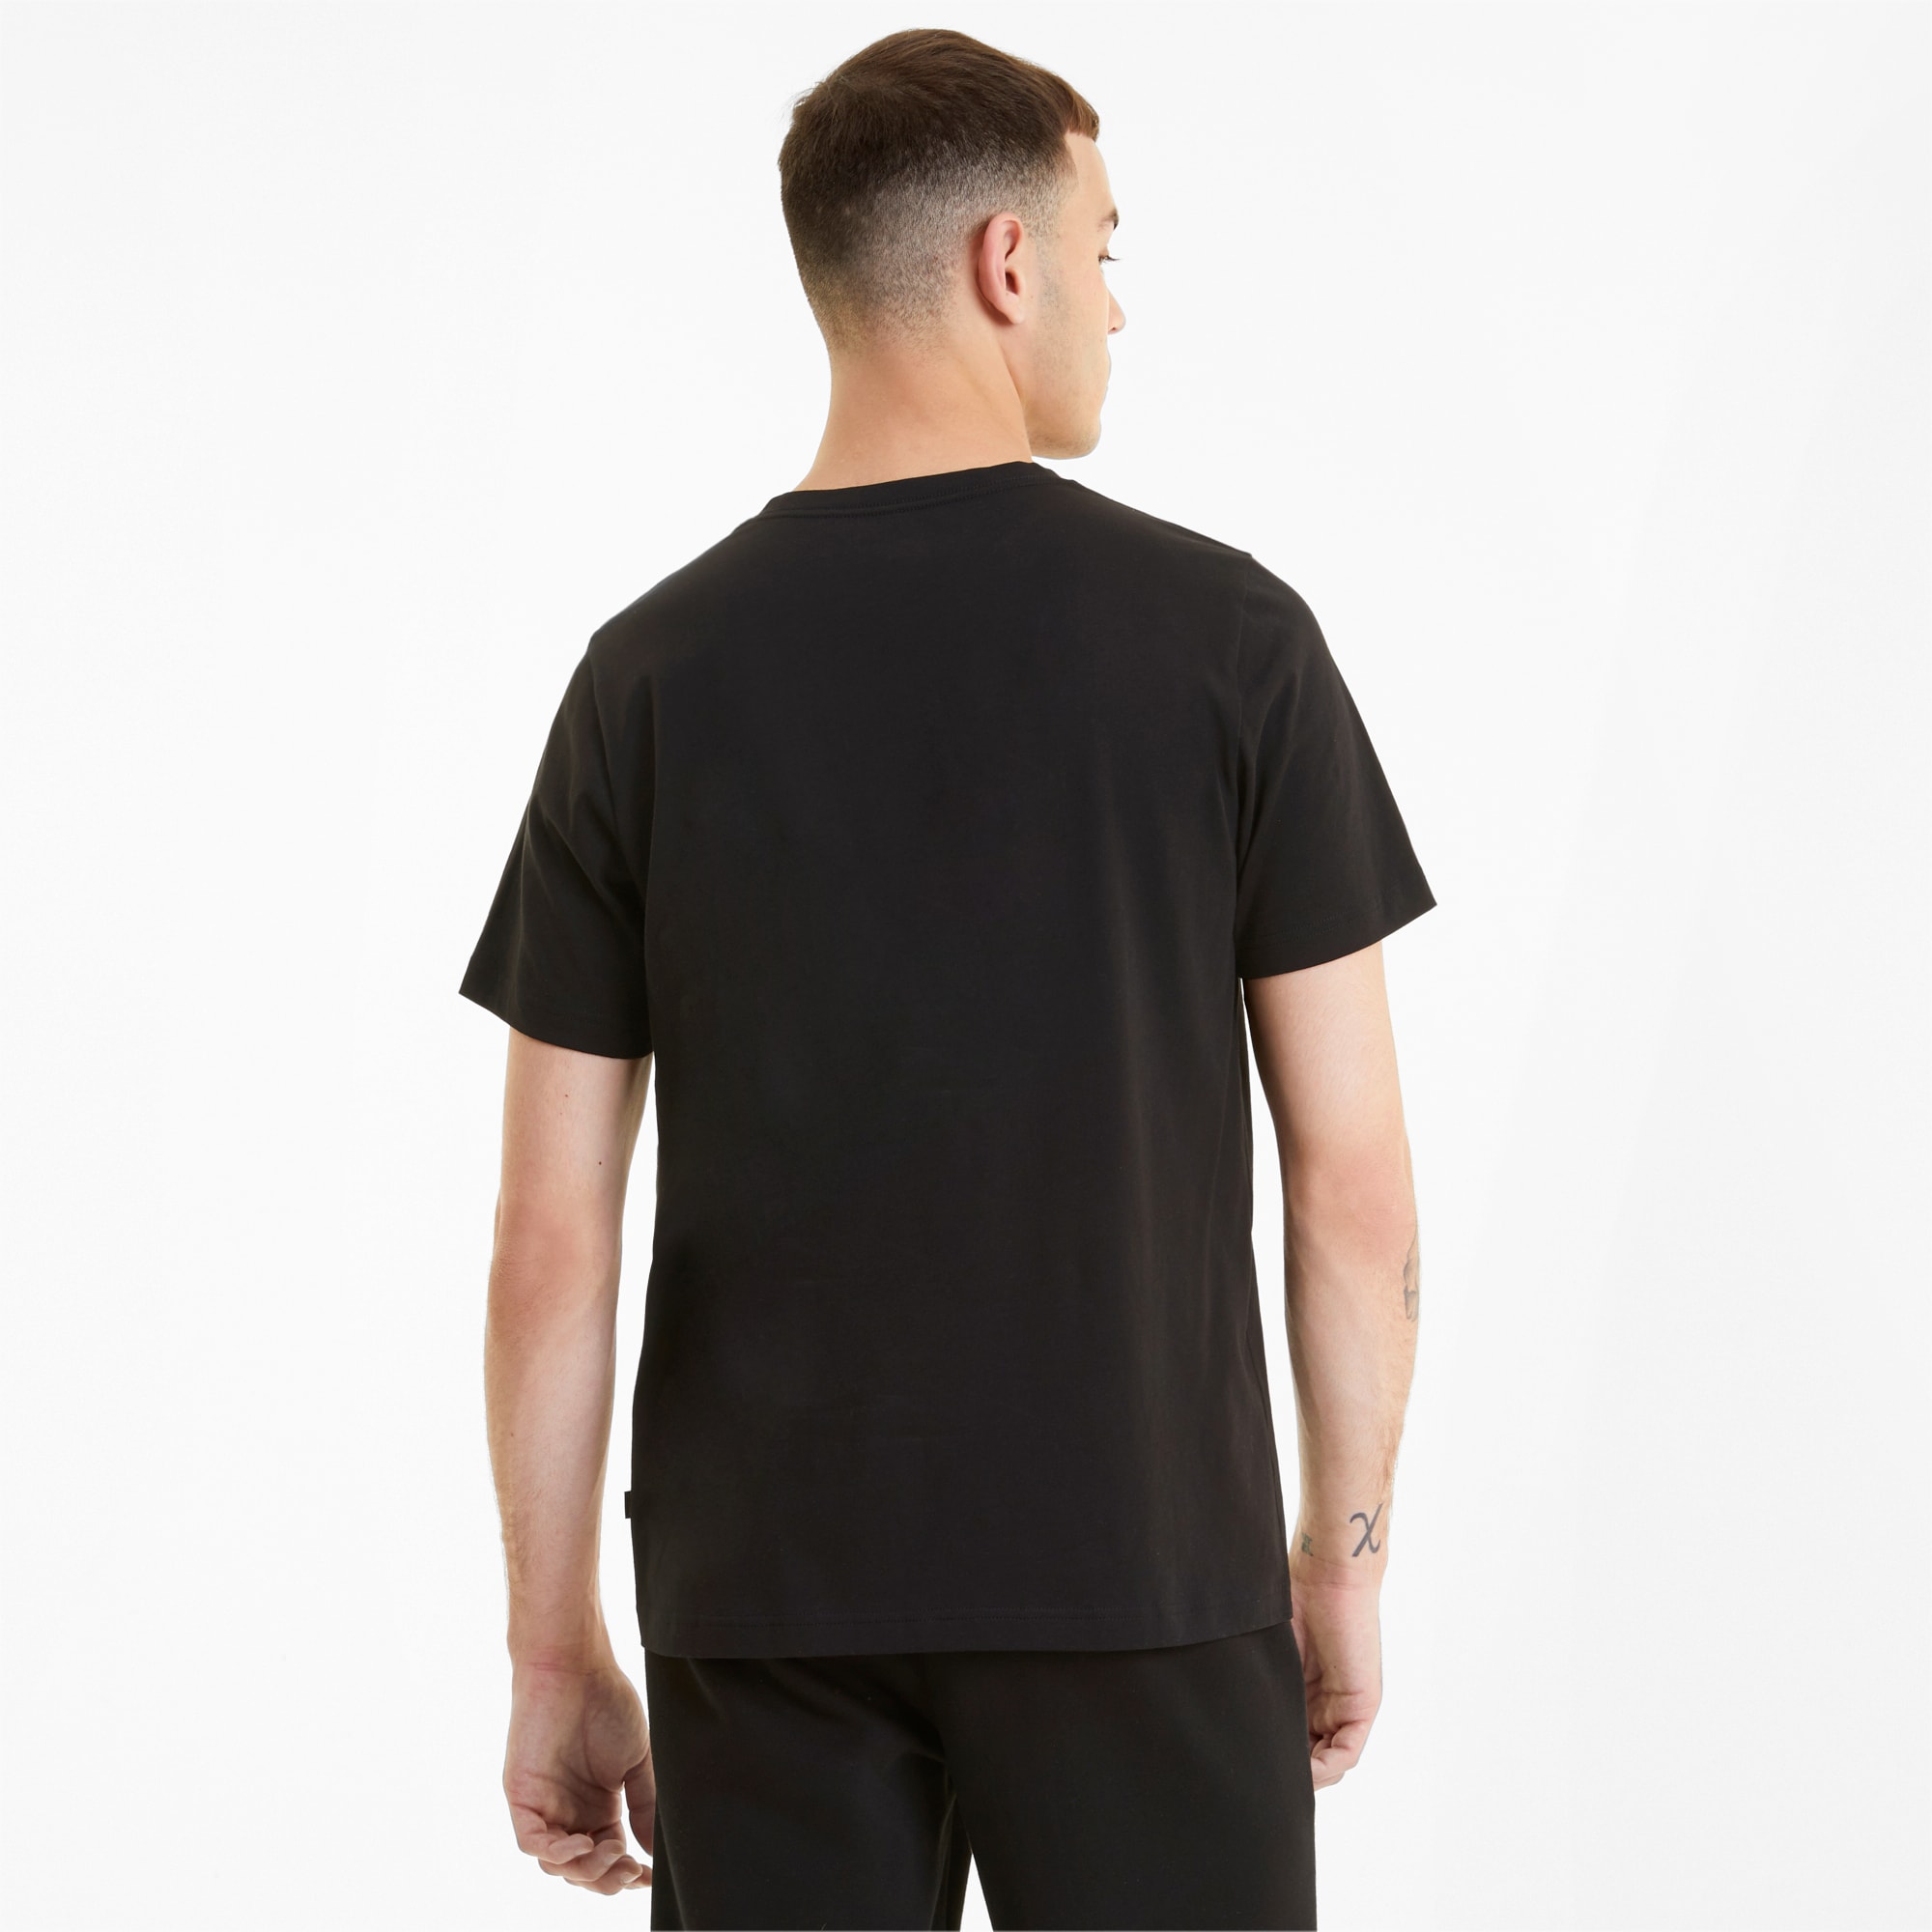 PUMA Essentials V-Neck T-Shirt Men, Black, Size XS, Clothing